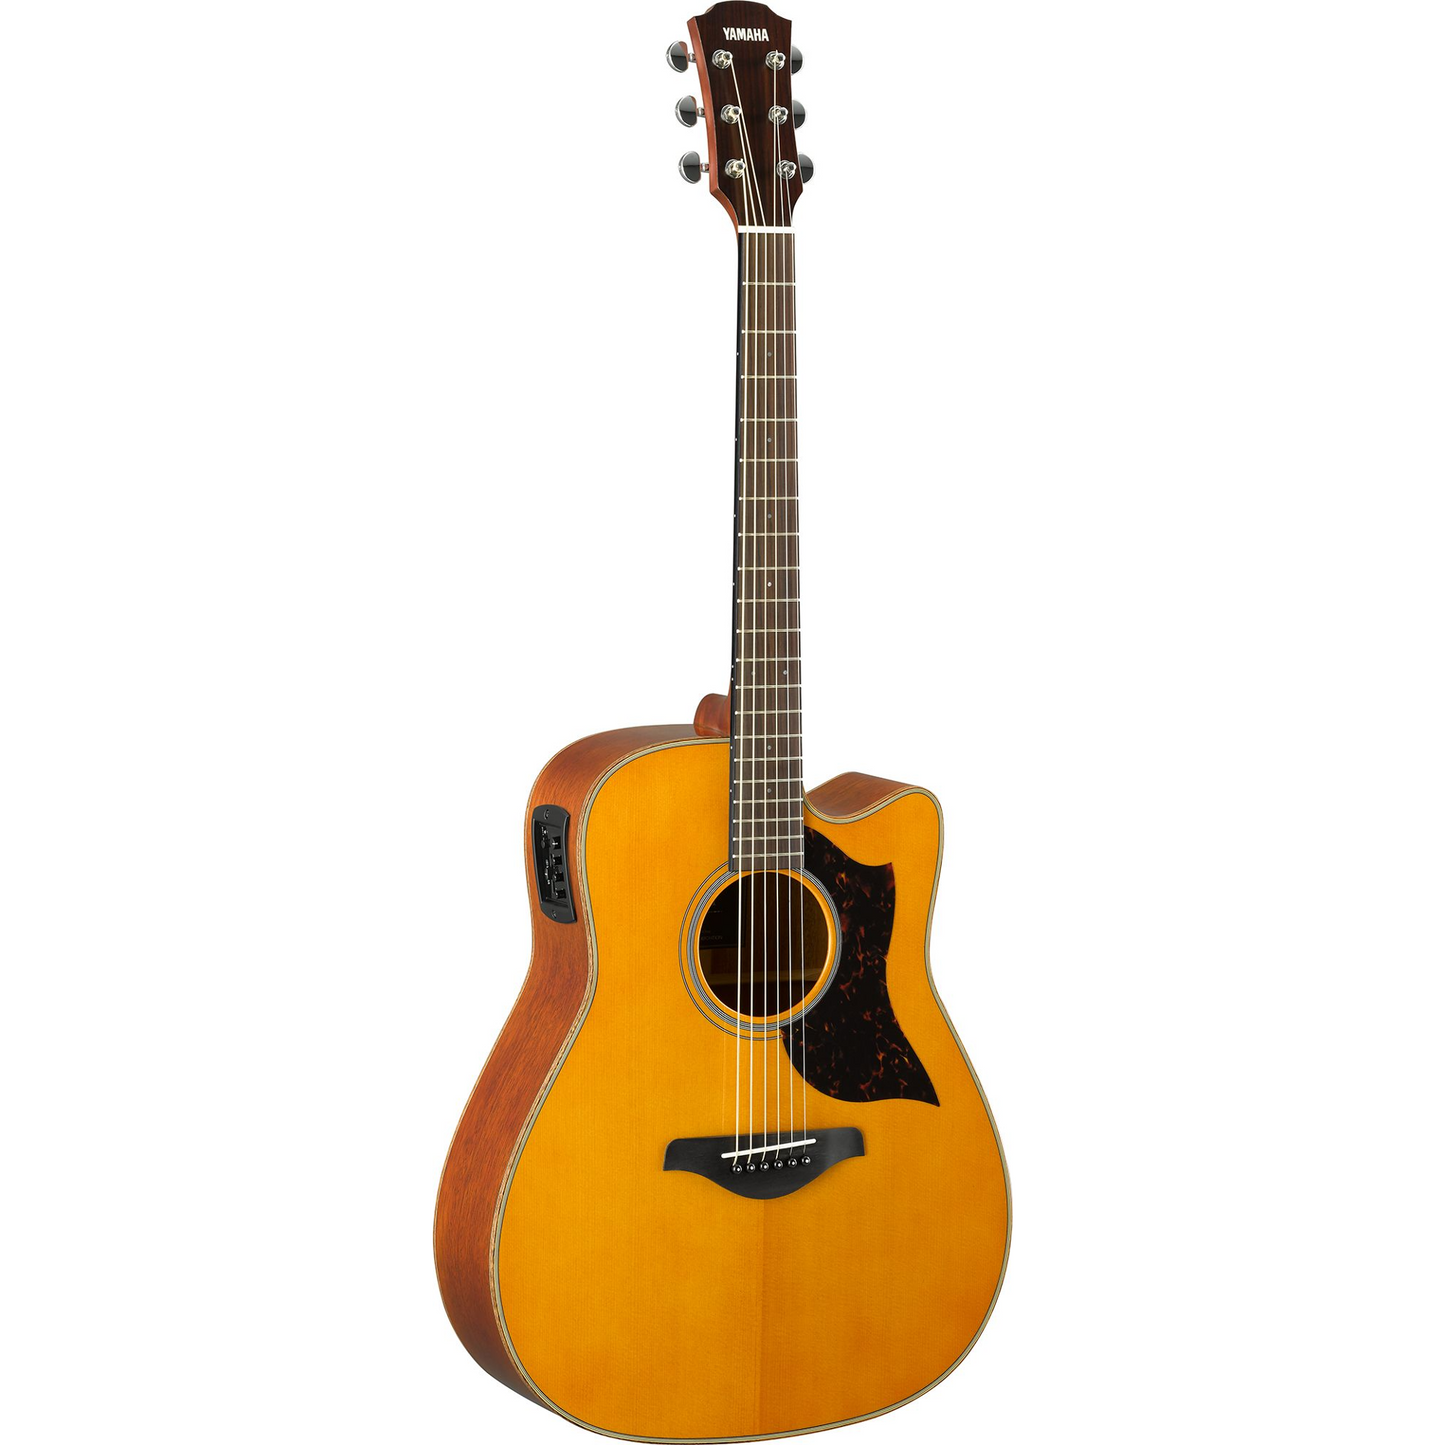 Yamaha A1M Folk Acoustic Electric Guitar - Vintage Natural